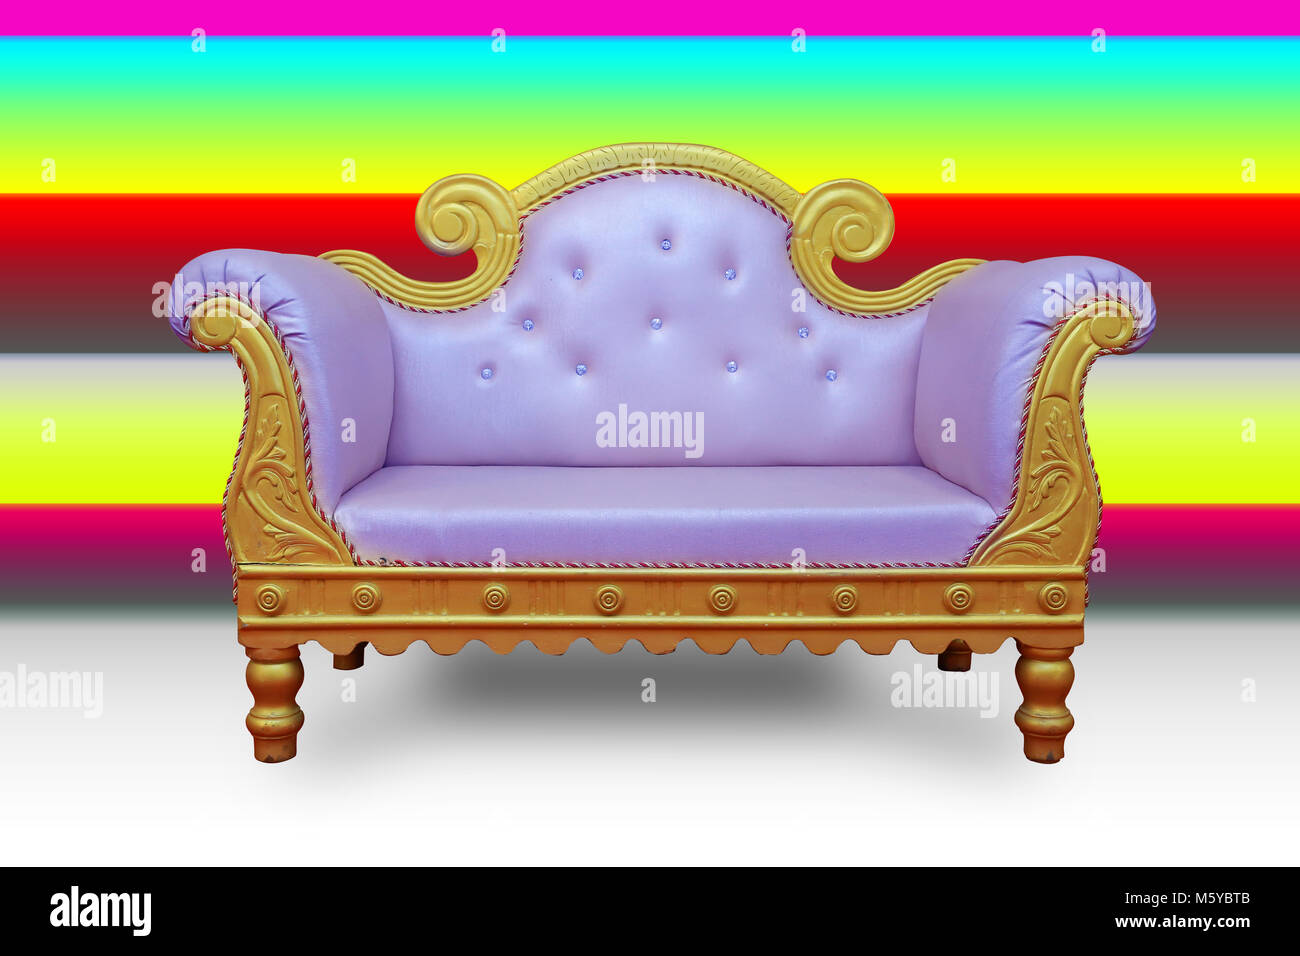 Closeup luxury sofa wedding stage on colorful background Stock Photo - Alamy